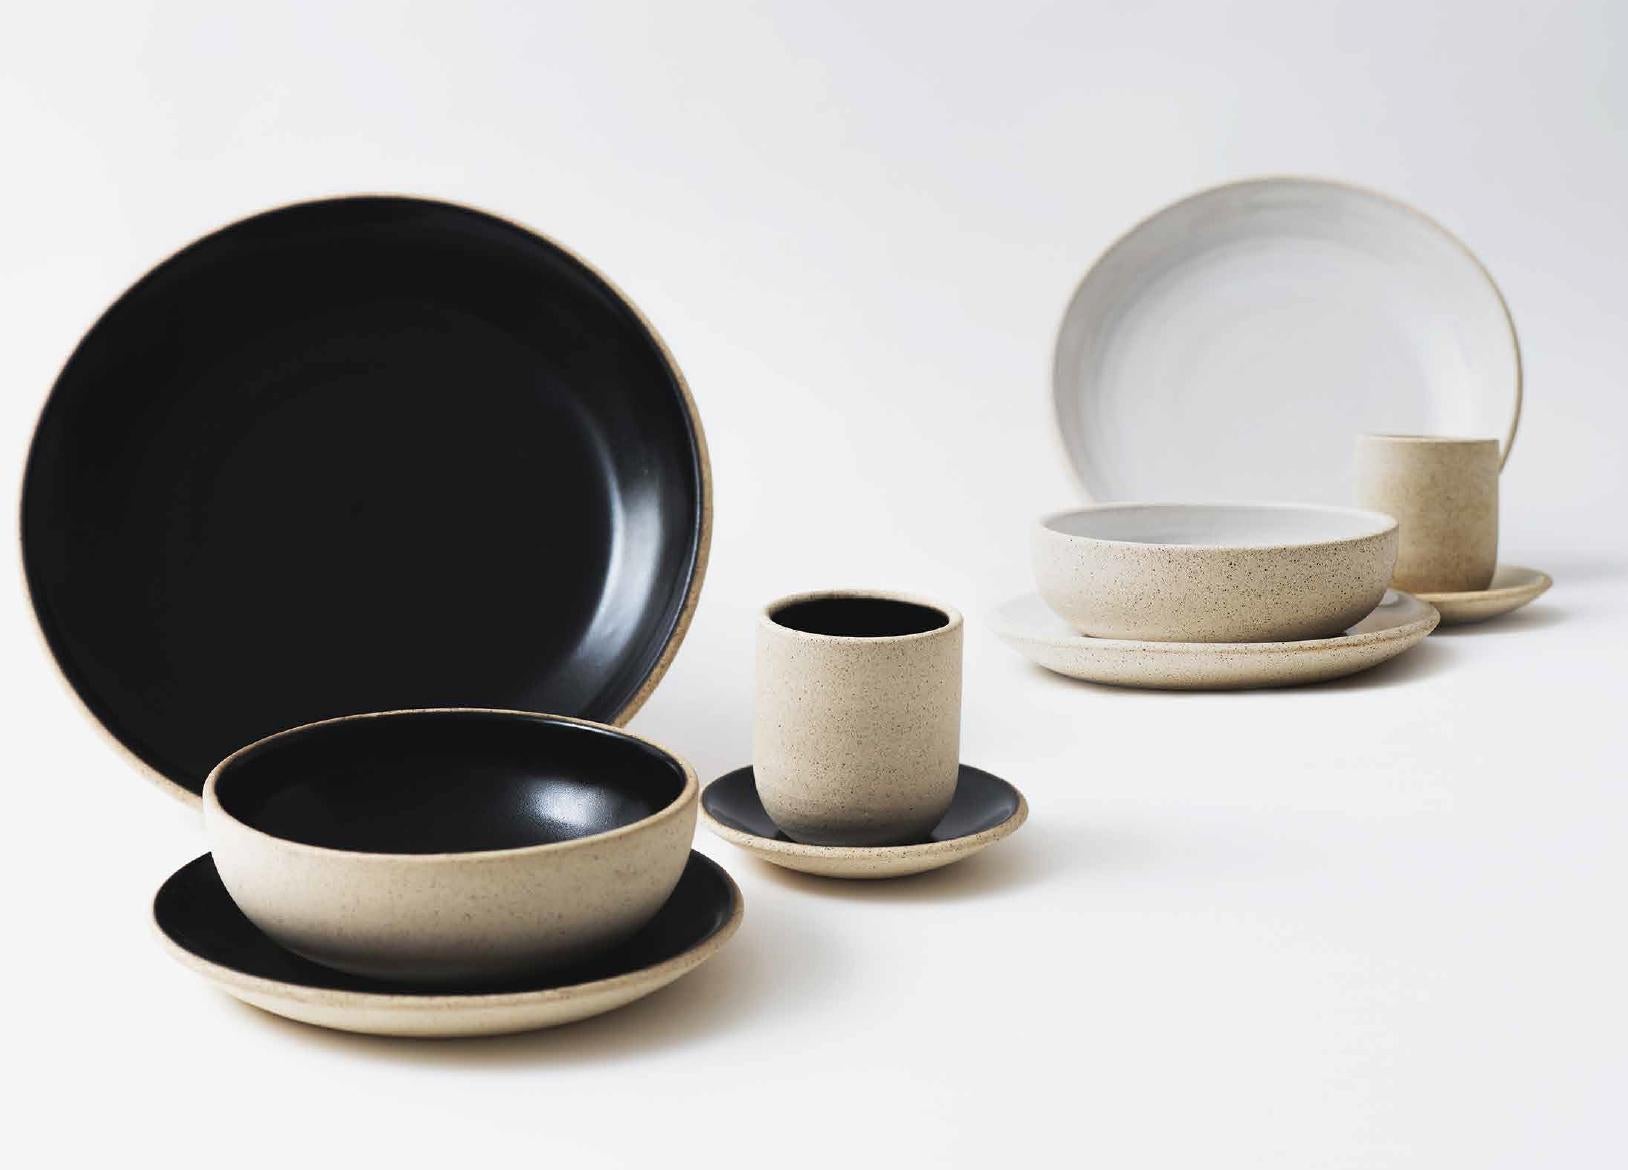 Organic Modern Handmade Ceramic Stoneware Dinner Plate in Black Obsidian and Natural, in Stock